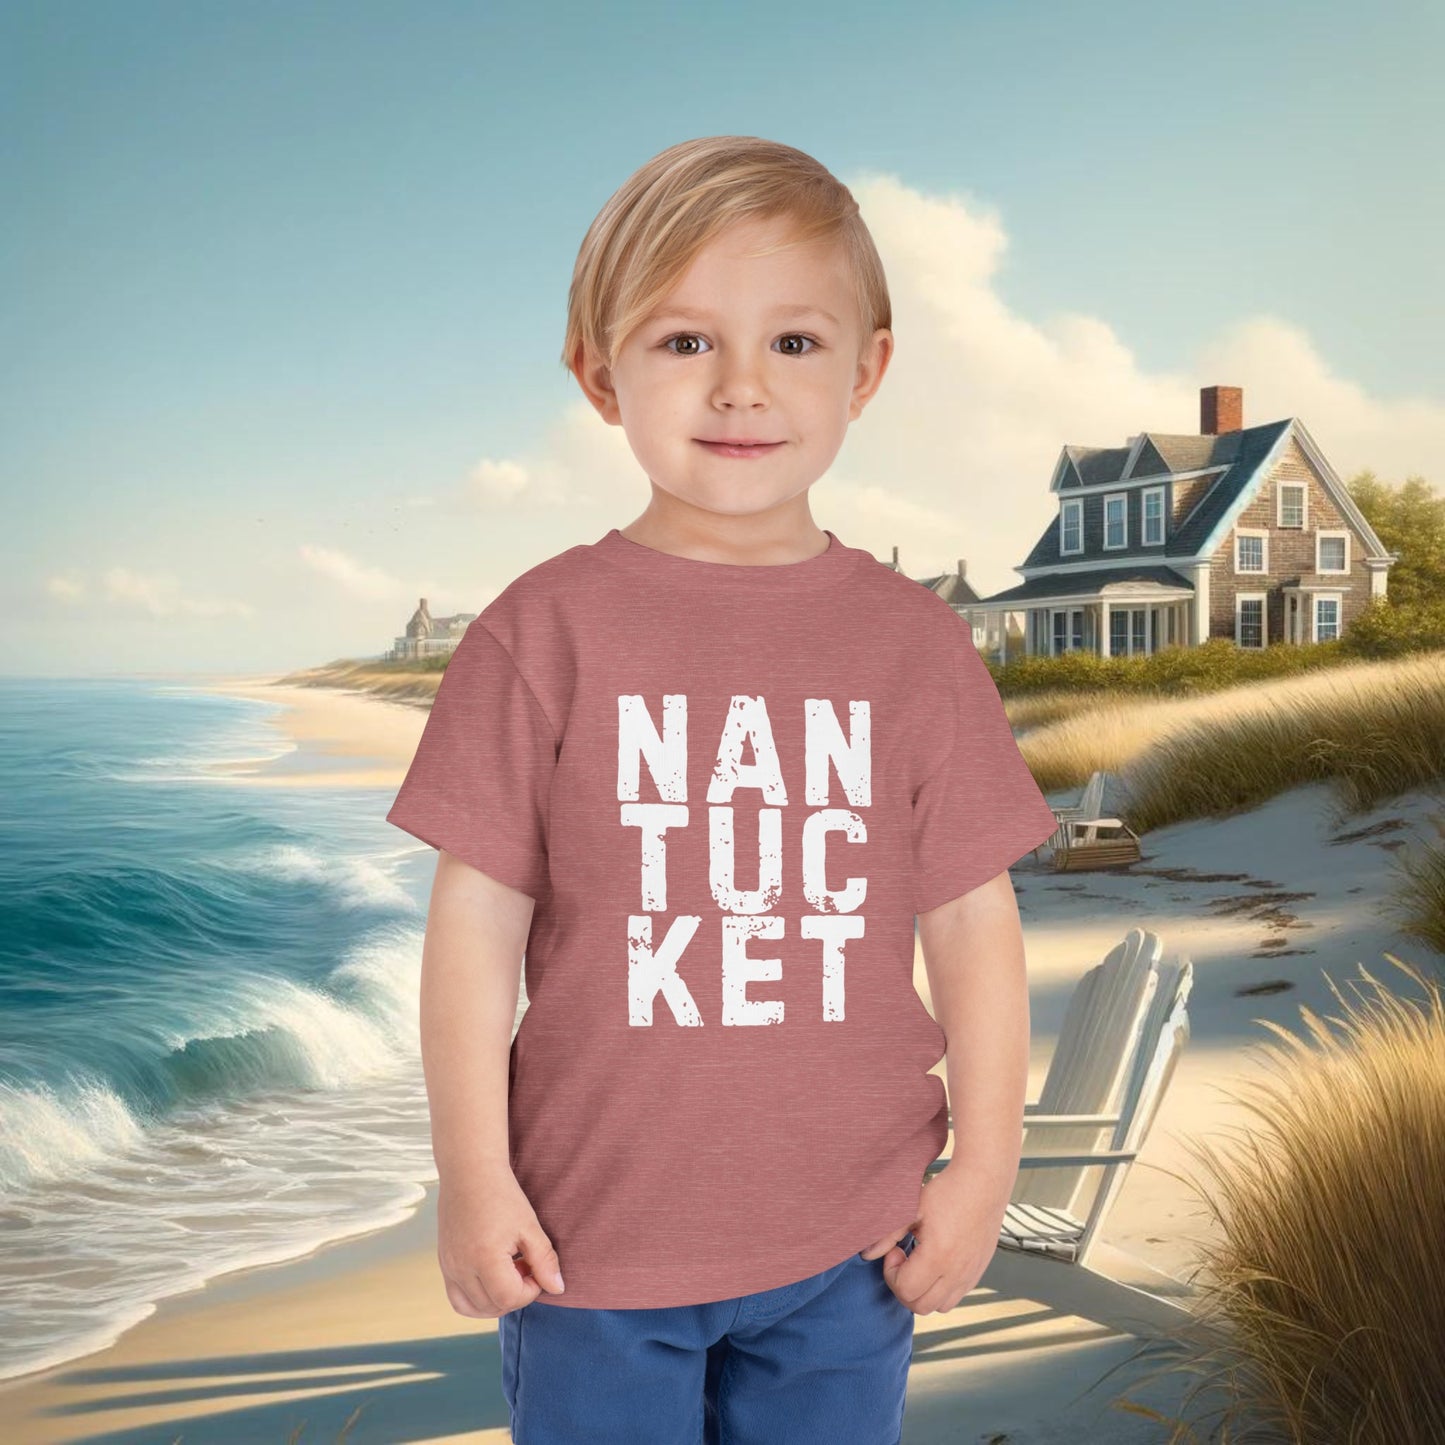 Nantucket Toddler T-Shirt - Ultra-Soft Bella Canvas, 100% Airlume Cotton, Lightweight and Comfortable